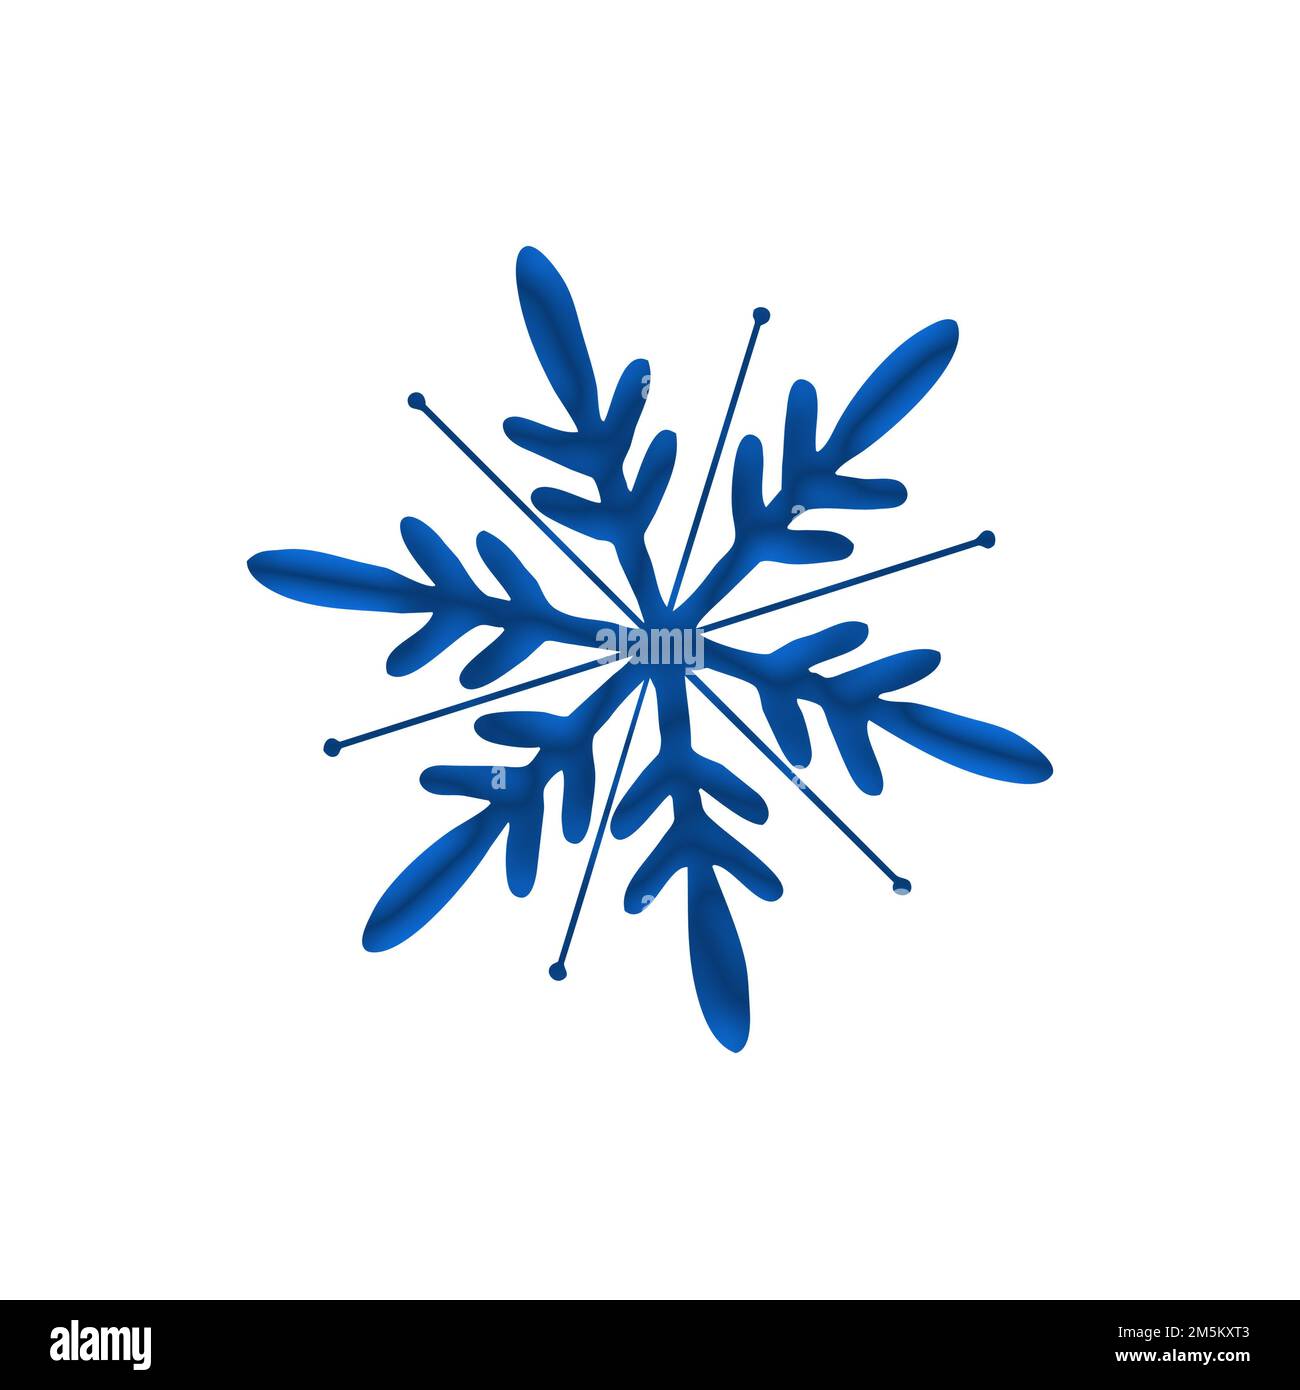 digitally rendered blue snowflakes on white background. Stock Photo